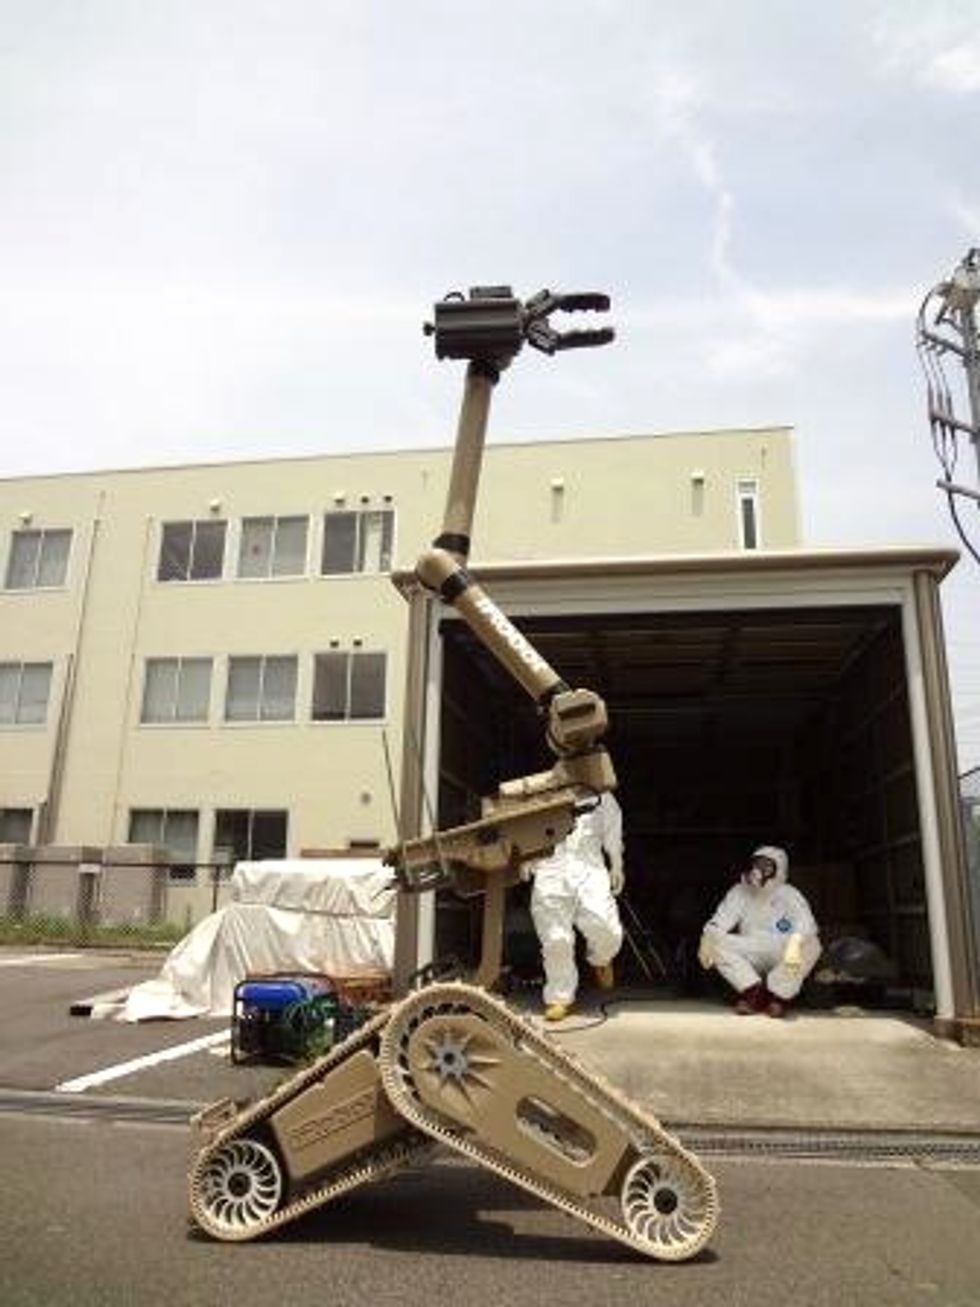 robot operator training with irobot warrior extended at fukushima daiichi nuclear power plant